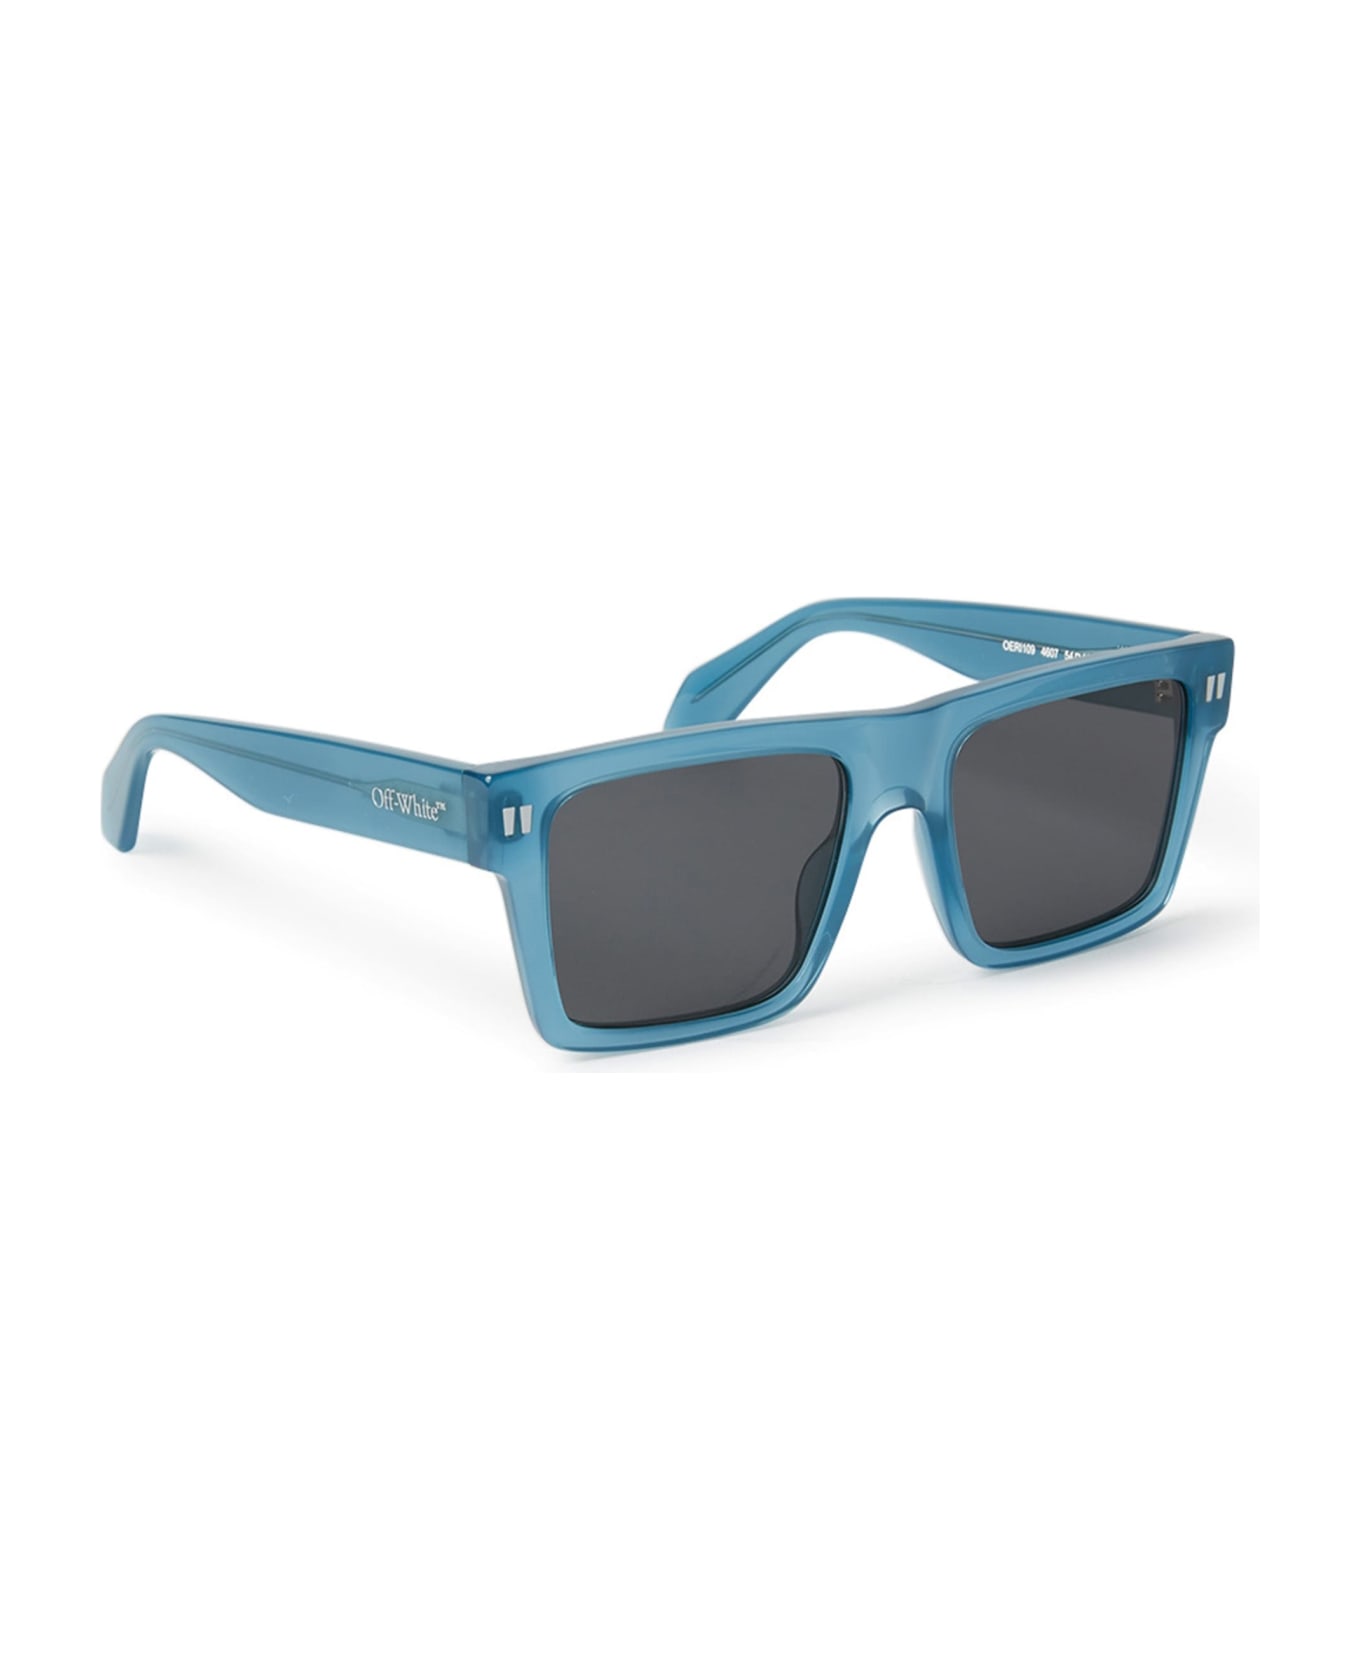 Off-White Lawton - Blue / Dark Grey Sunglasses - blue